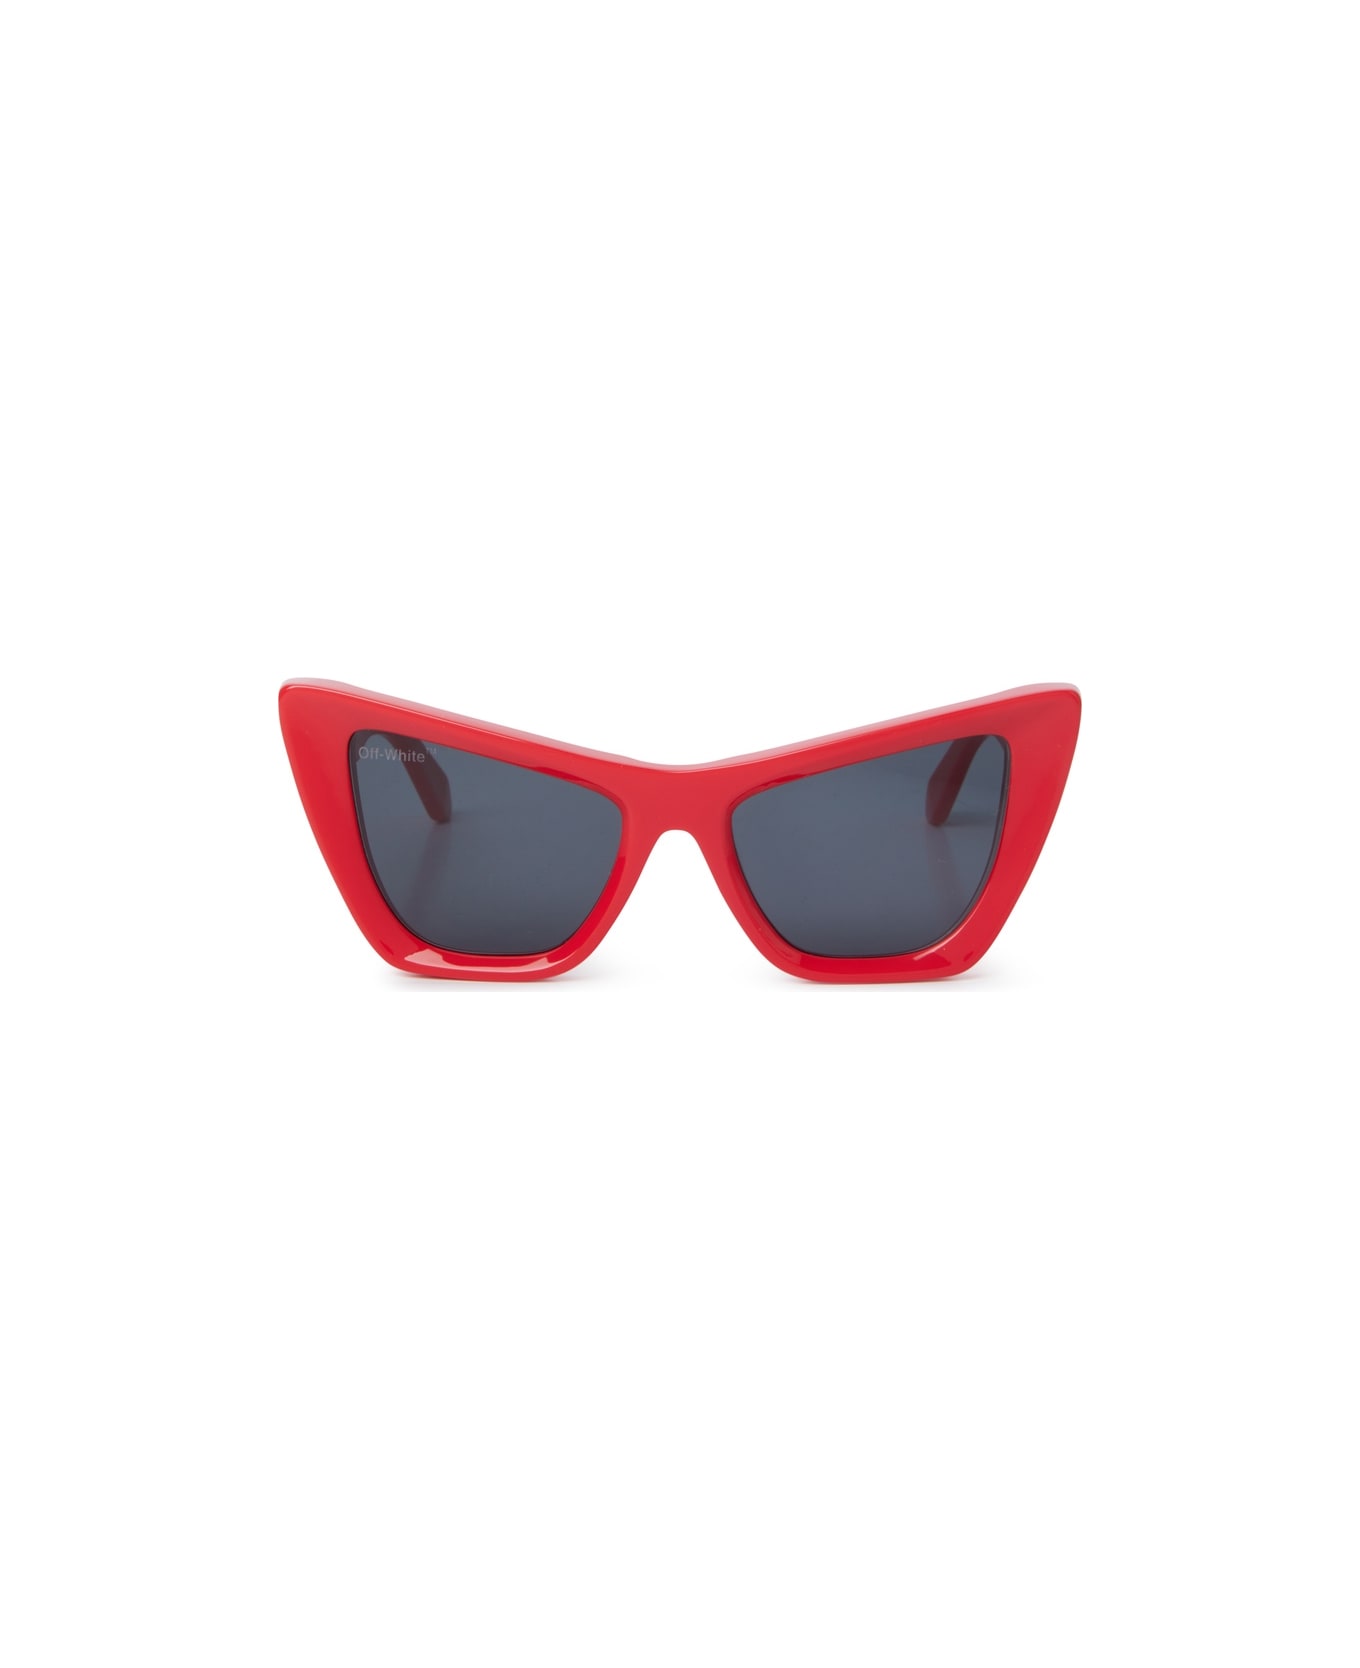 Off-White EDVARD SUNGLASSES Sunglasses - Red サングラス